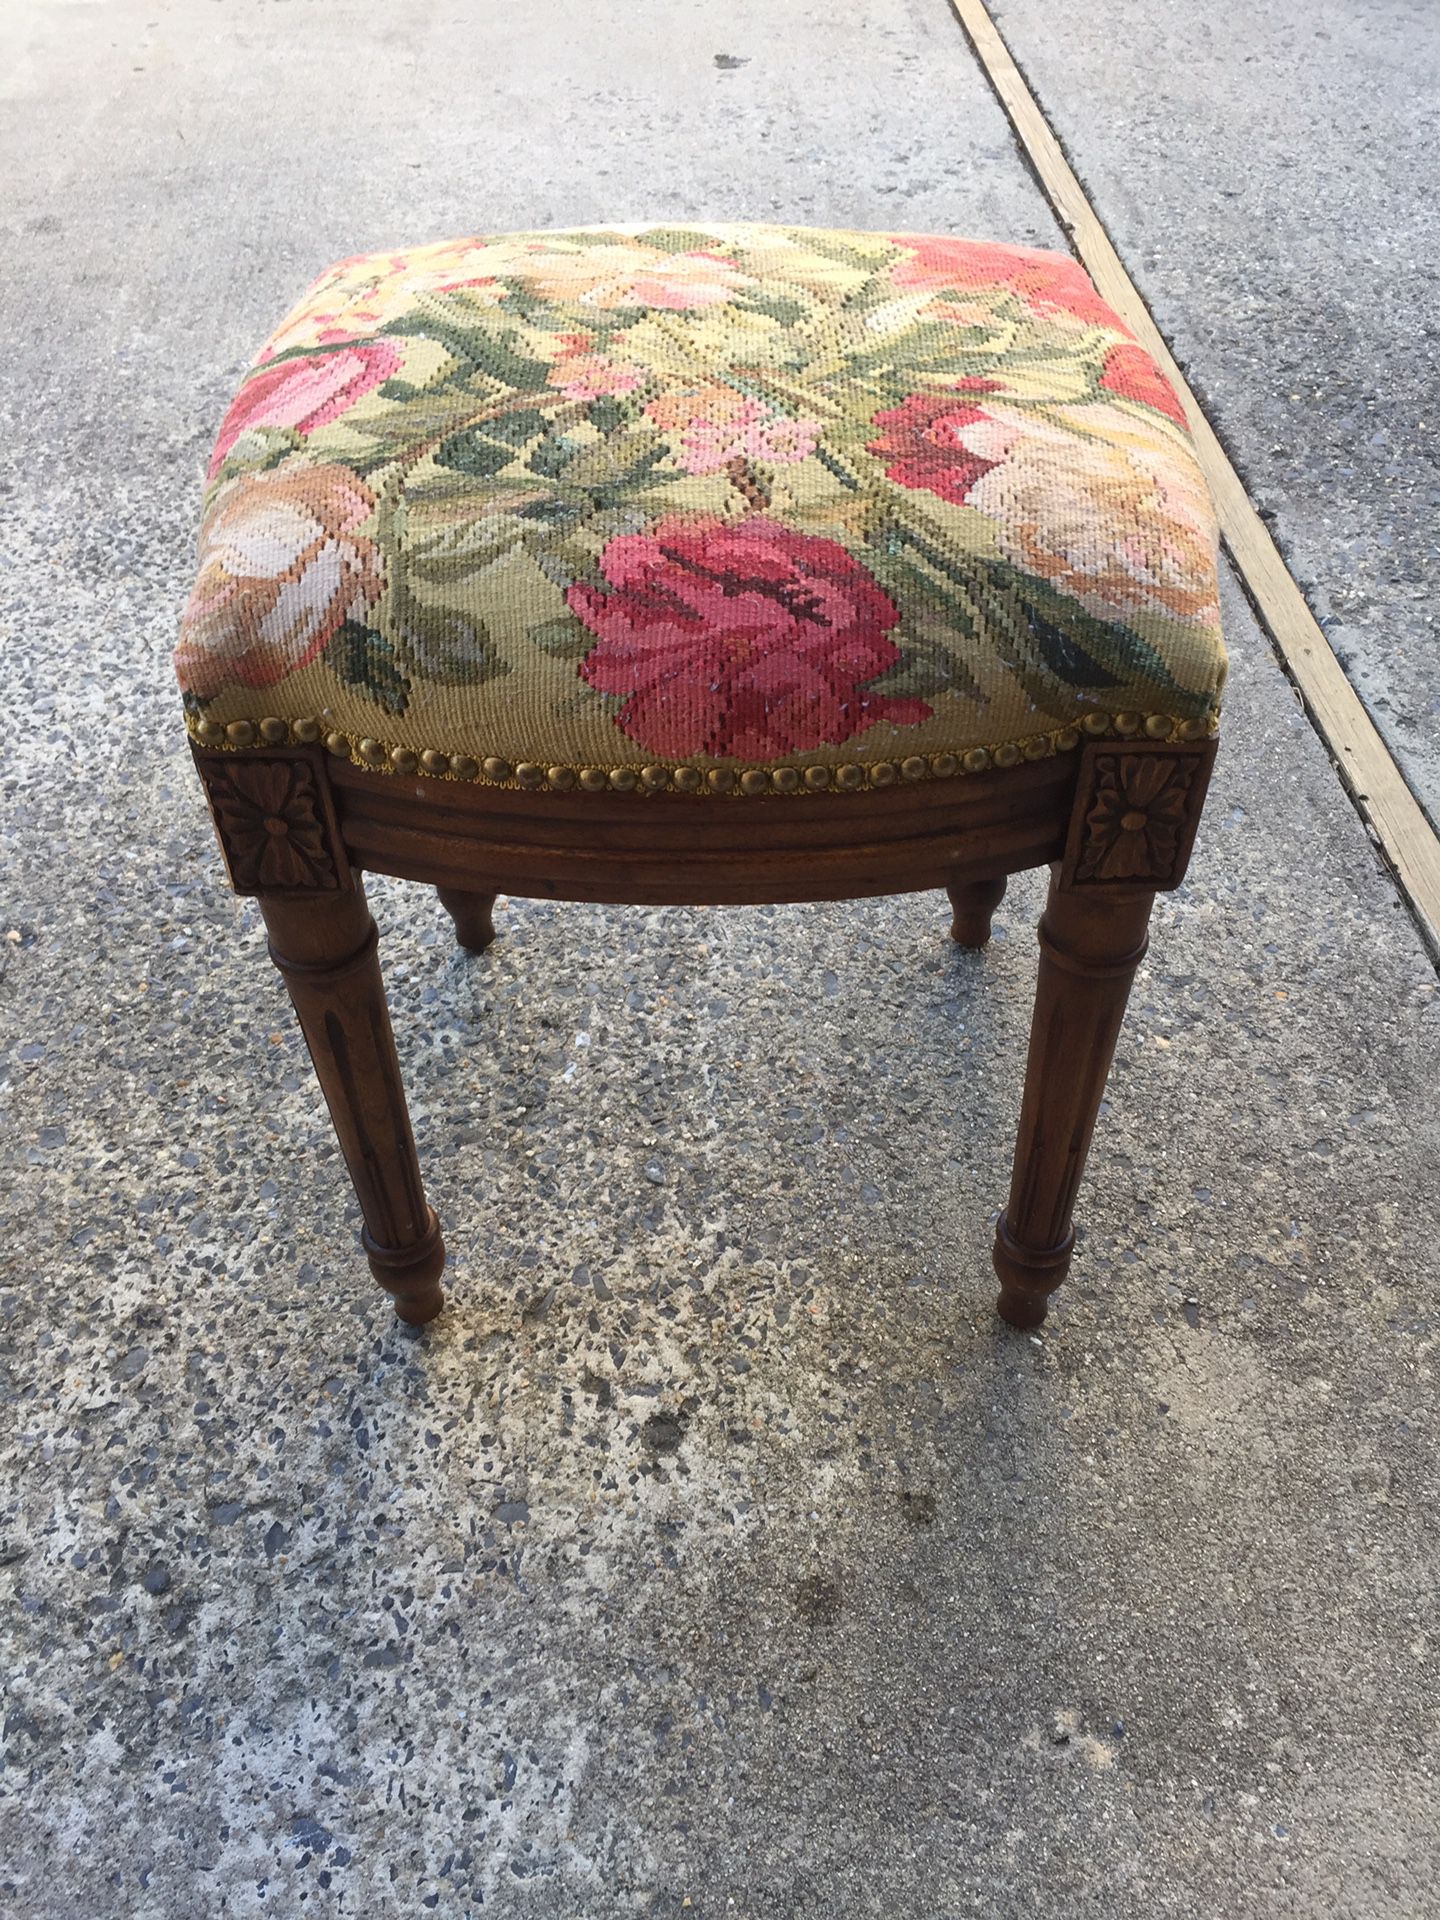 Antique style stool